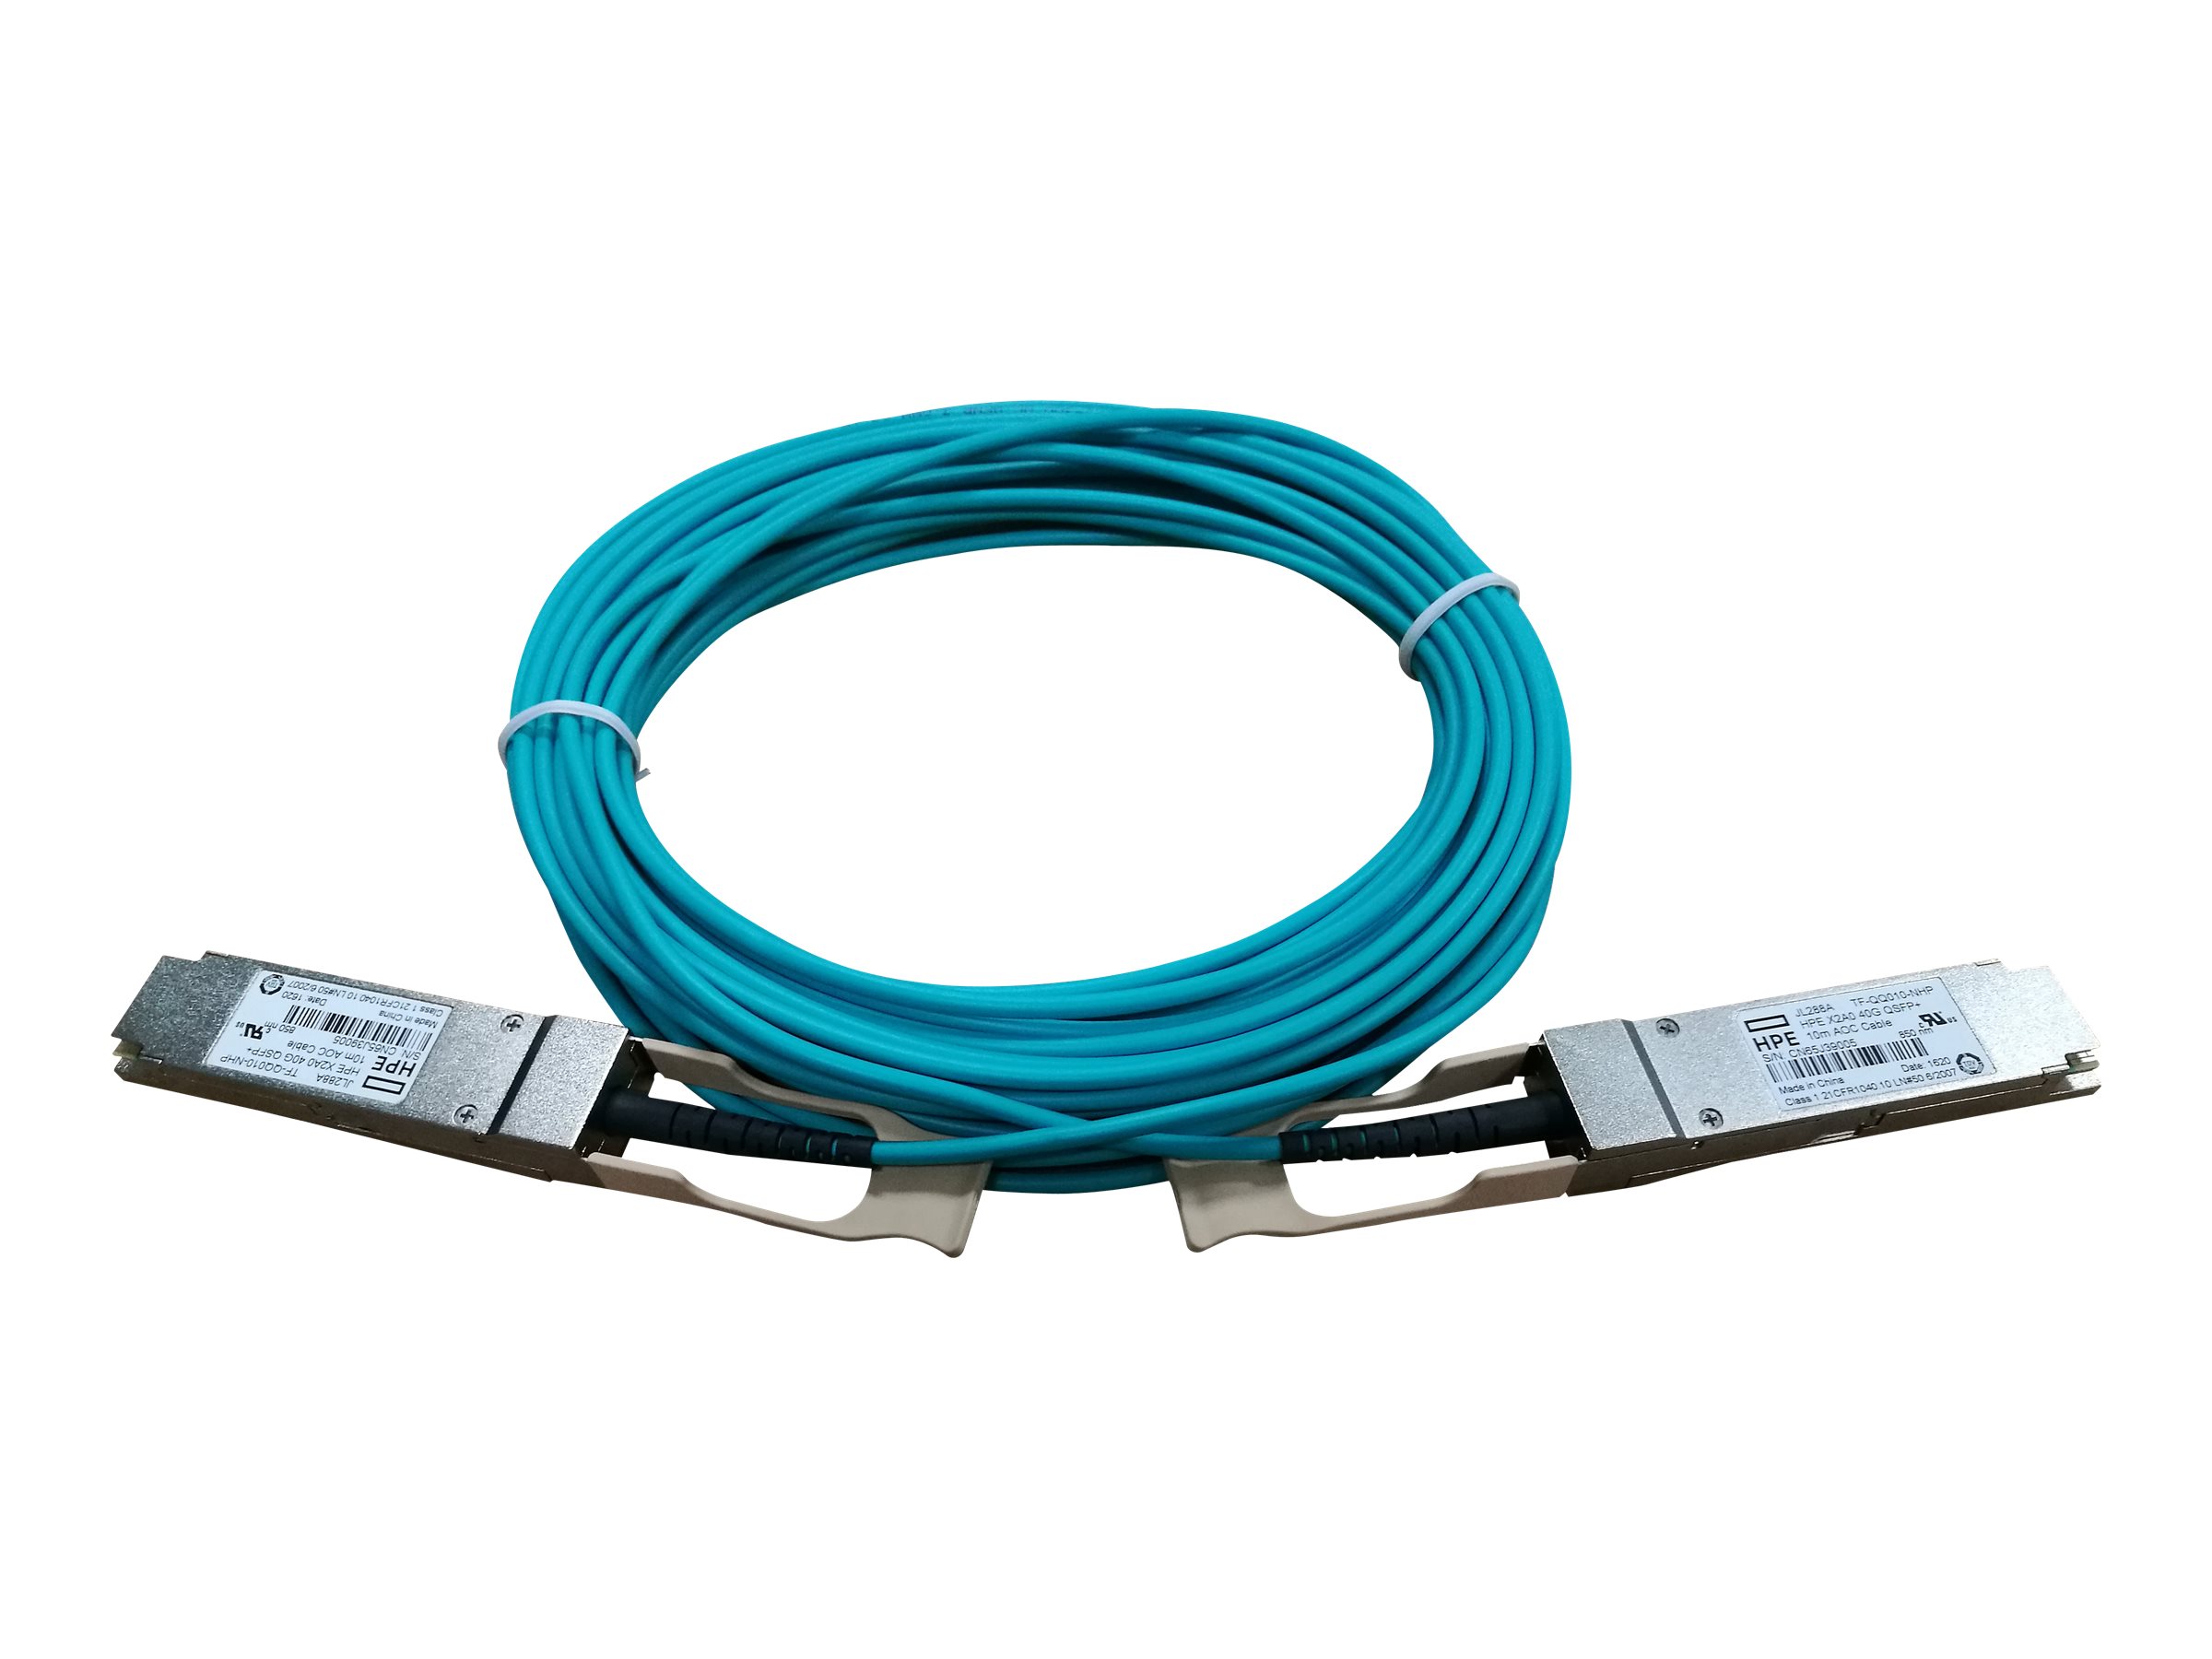 HPE X2A0 Active Optical Cable - Netzwerkkabel